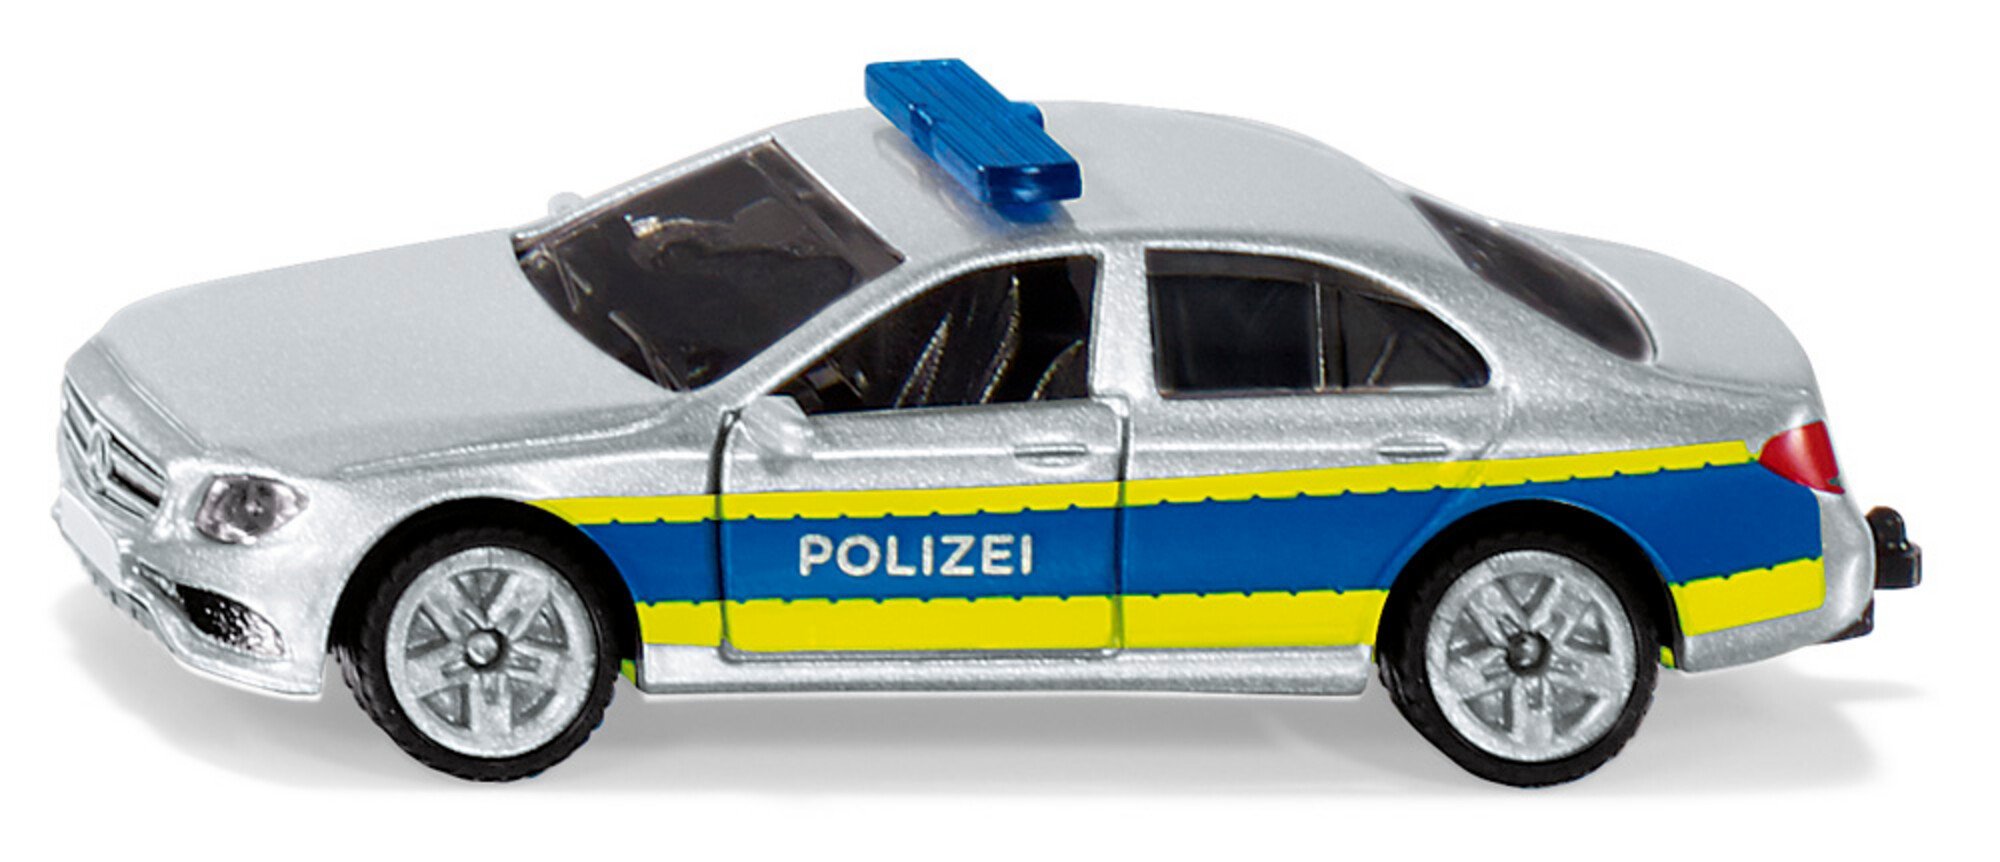 Police patrol car